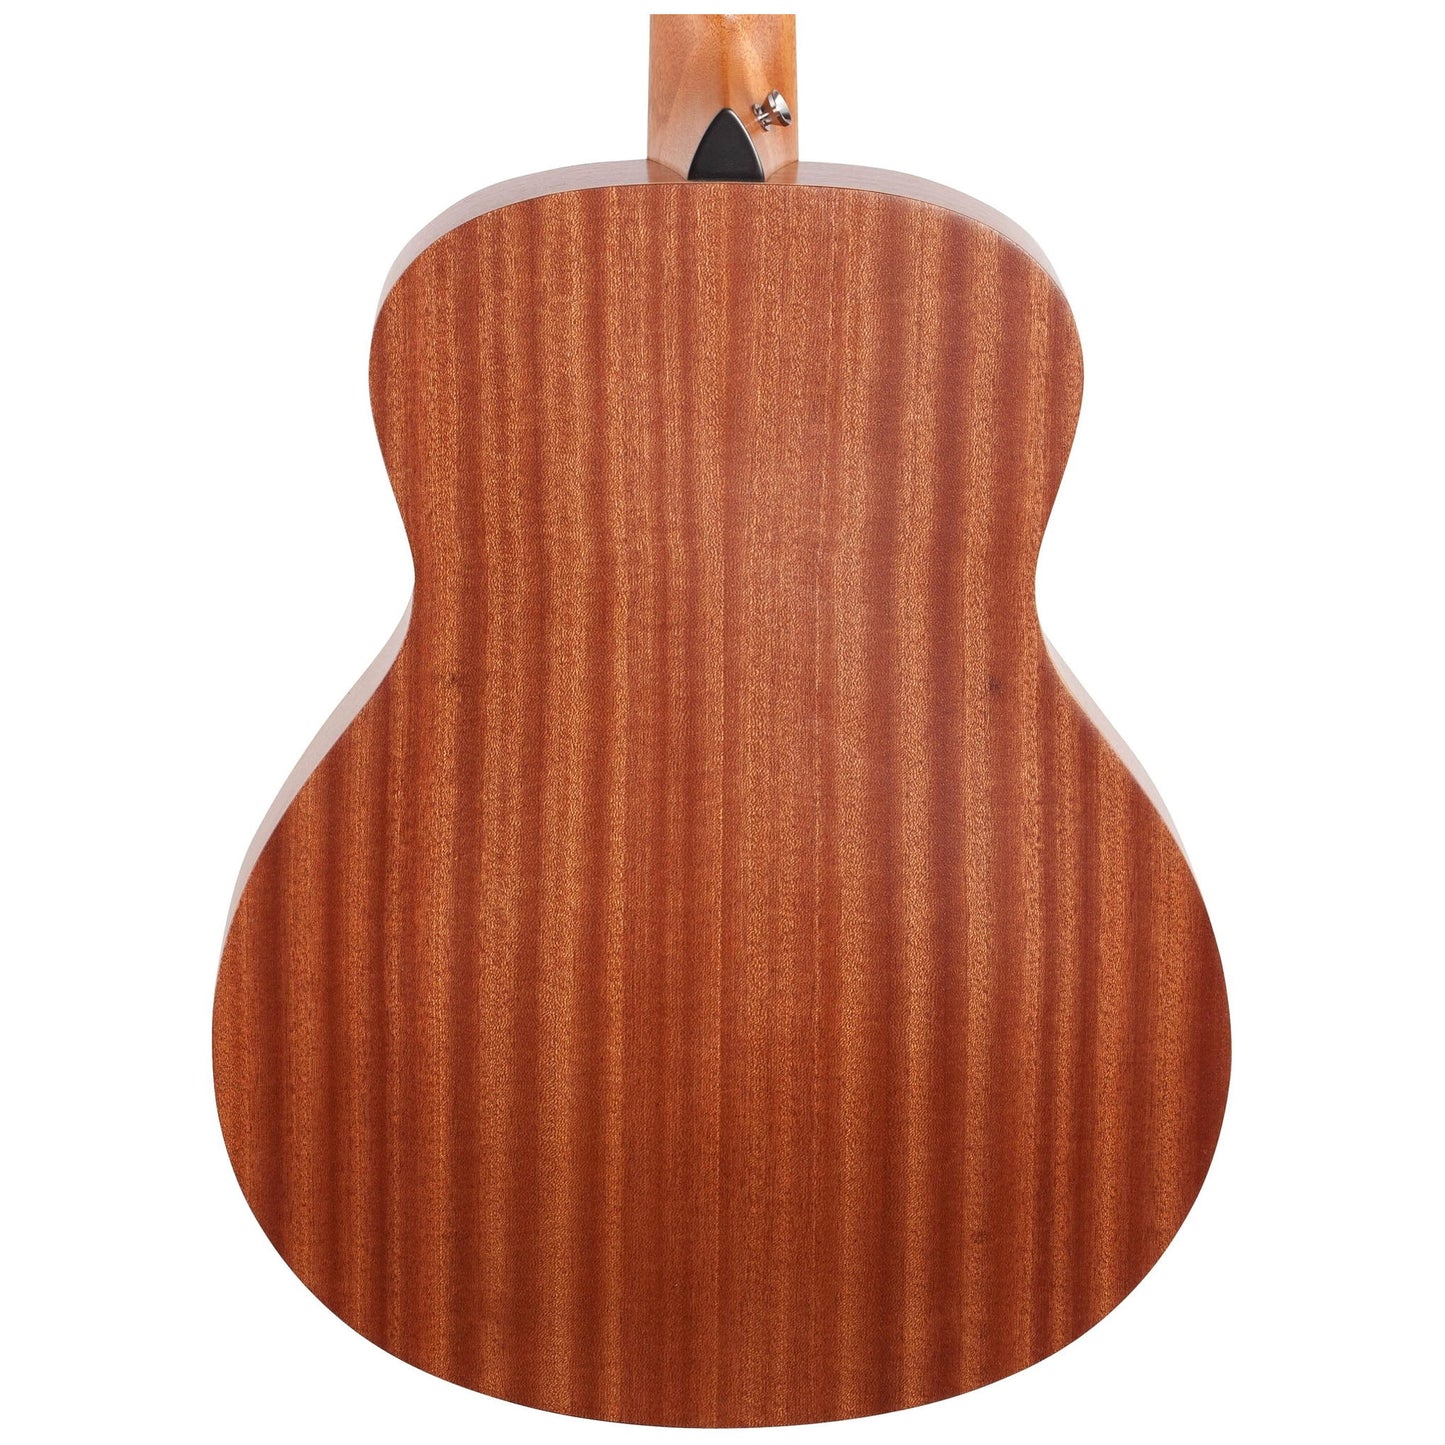 Taylor GS Mini Mahogany Left-Handed Acoustic Guitar, Natural